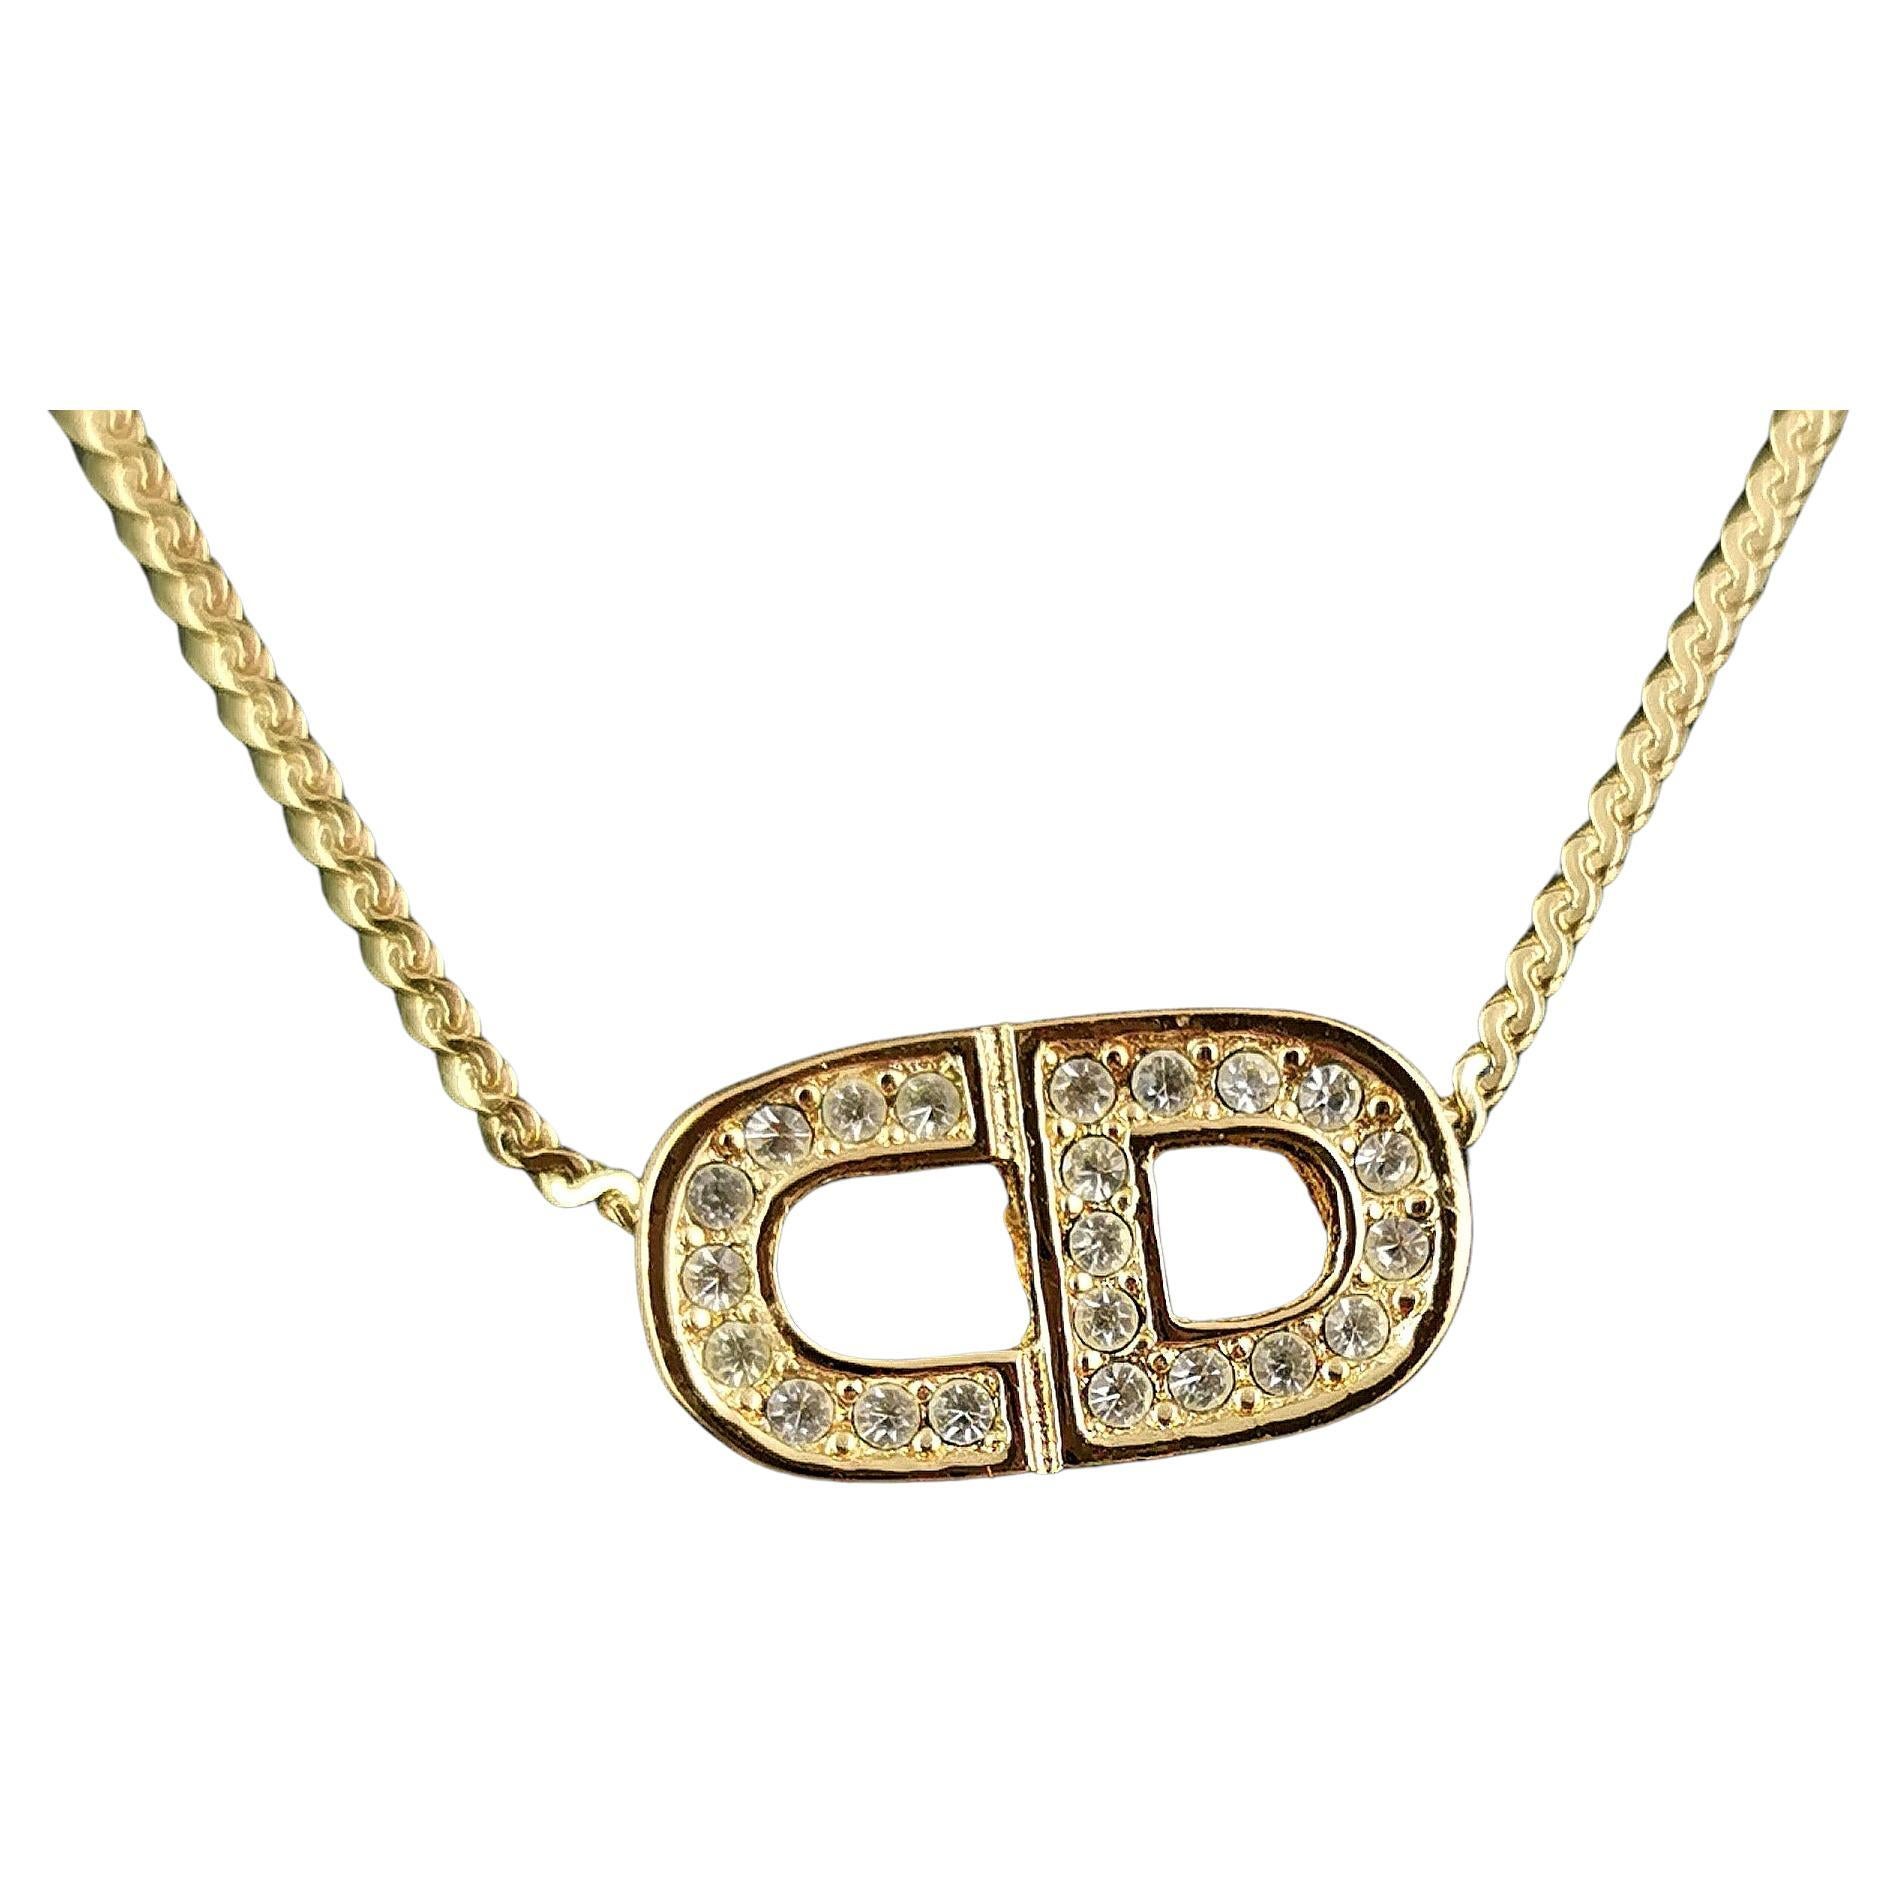  Vintage Christian Dior gold tone diamante logo pendant necklace  For Sale